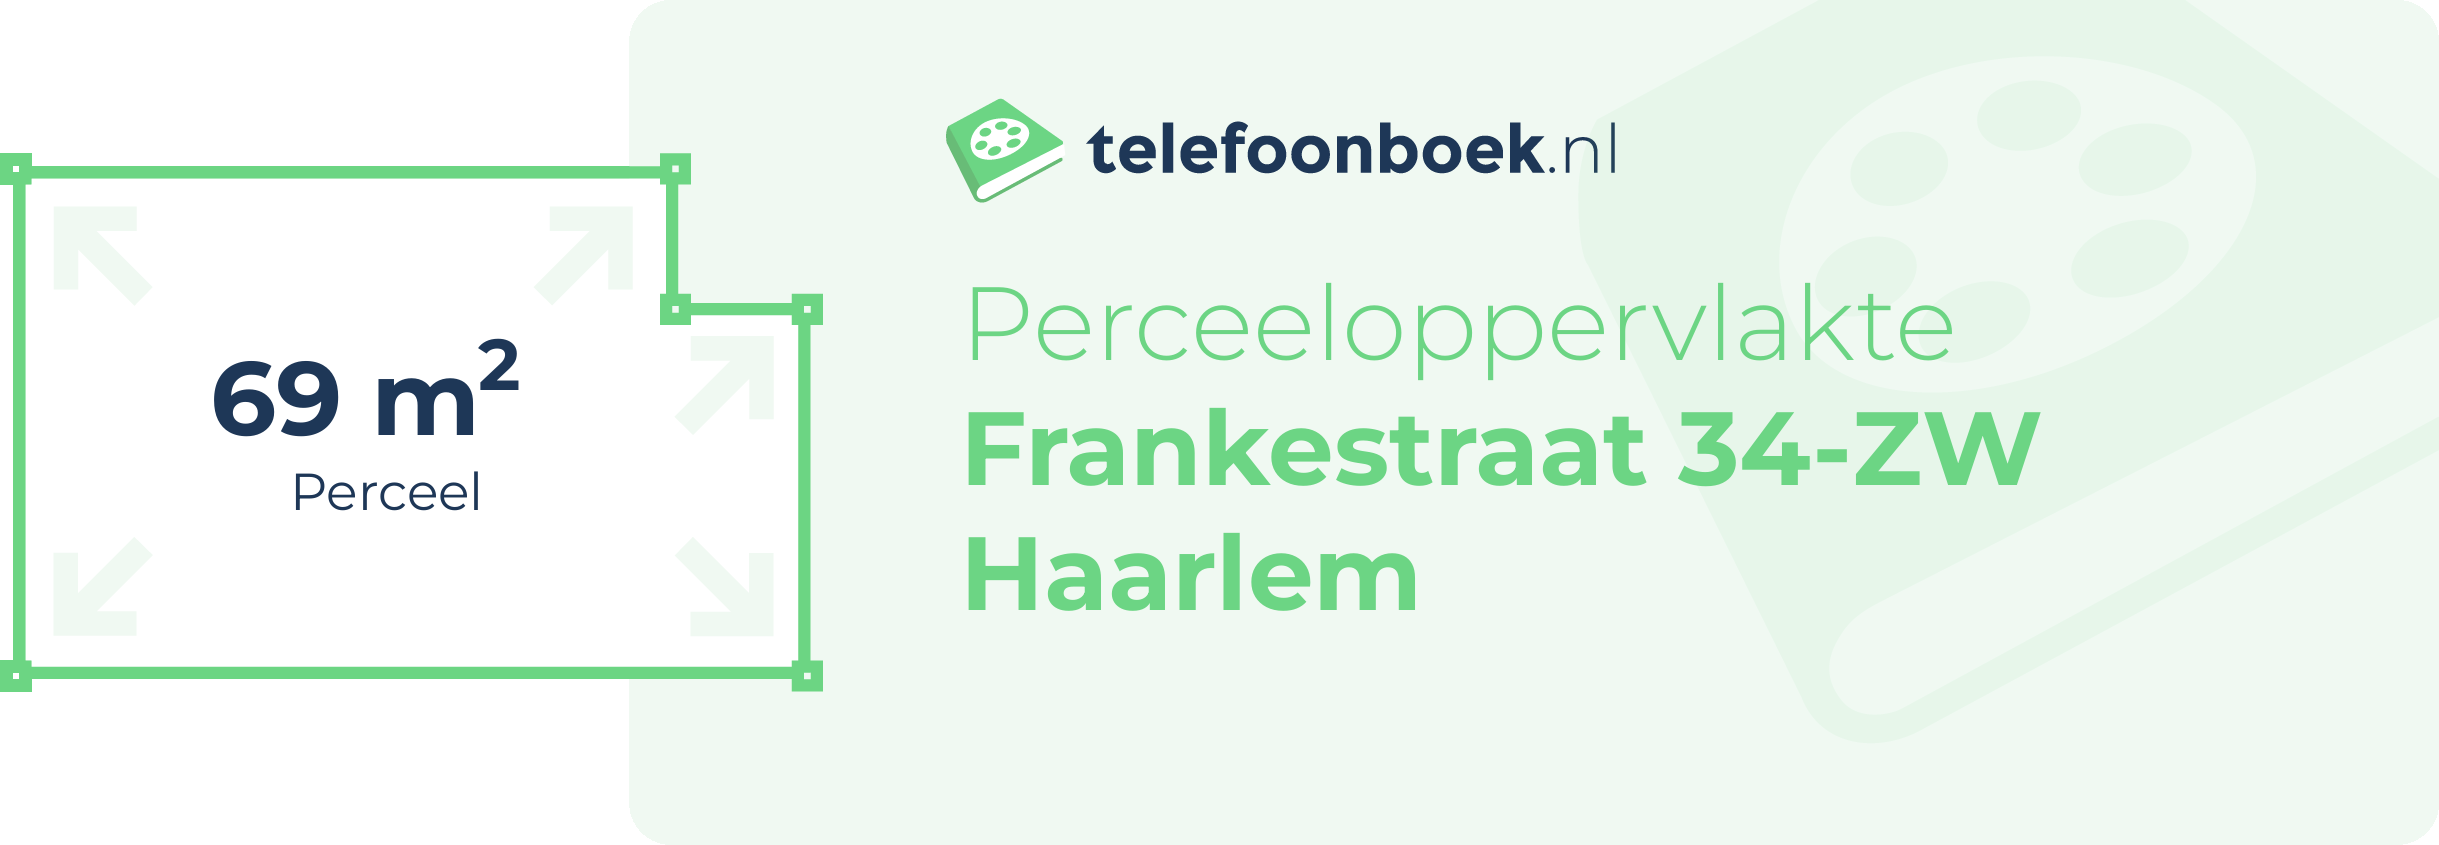 Perceeloppervlakte Frankestraat 34-ZW Haarlem